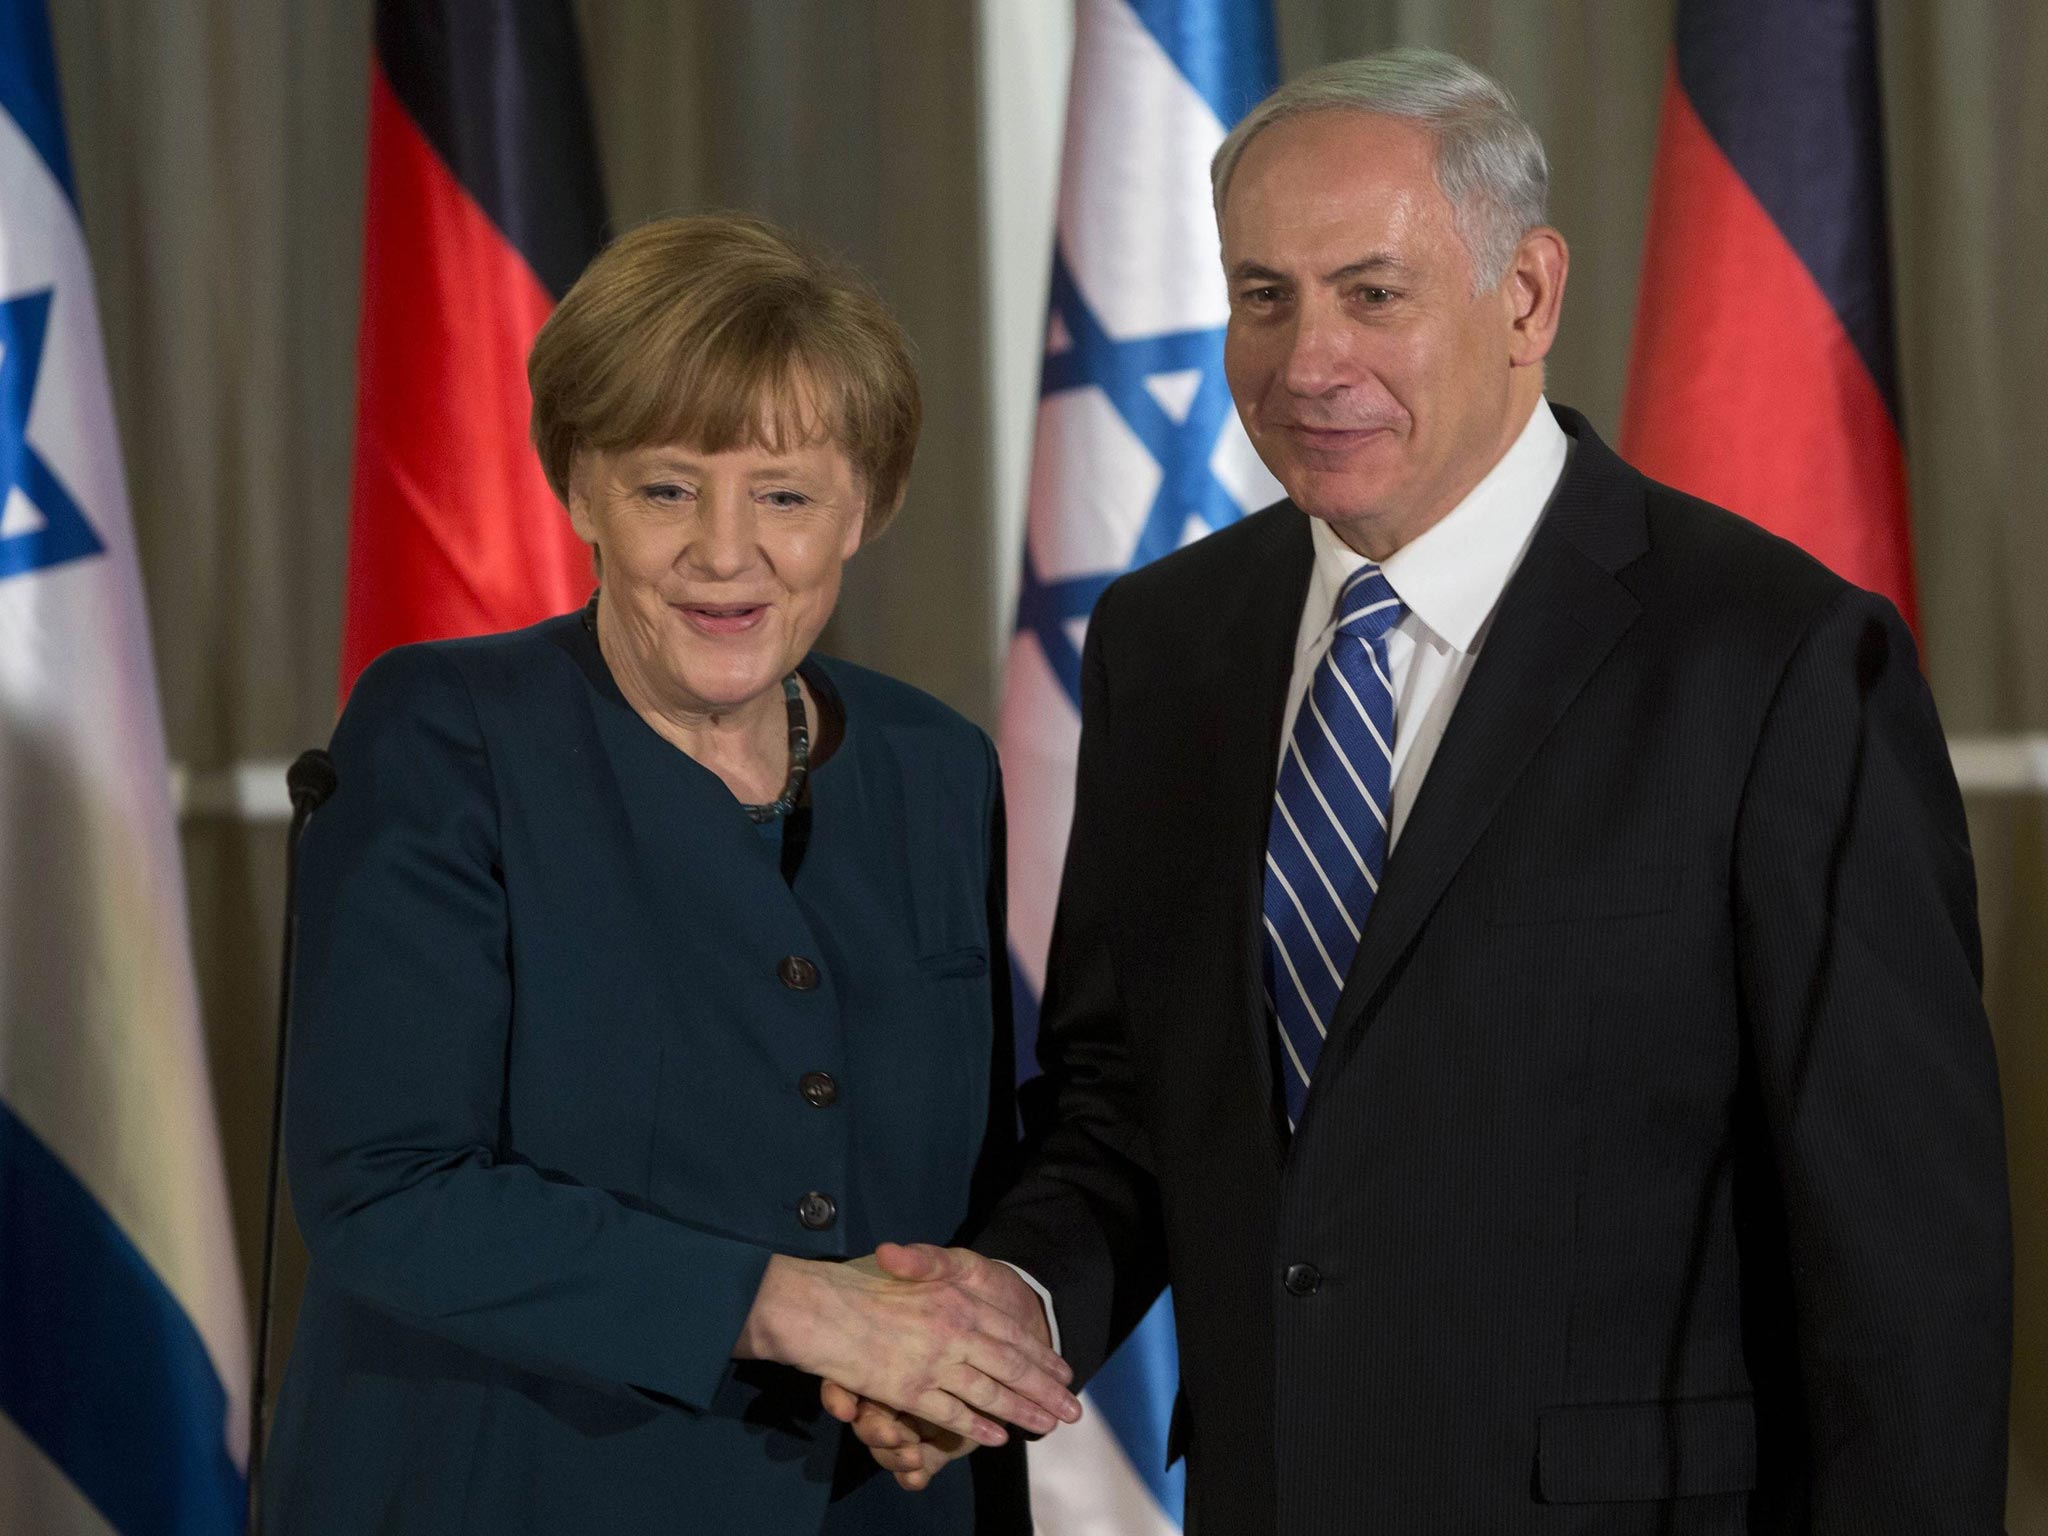 German Chancellor Angela Merkel shakes hands with Israeli Prime Minister Benjamin Netanyahu